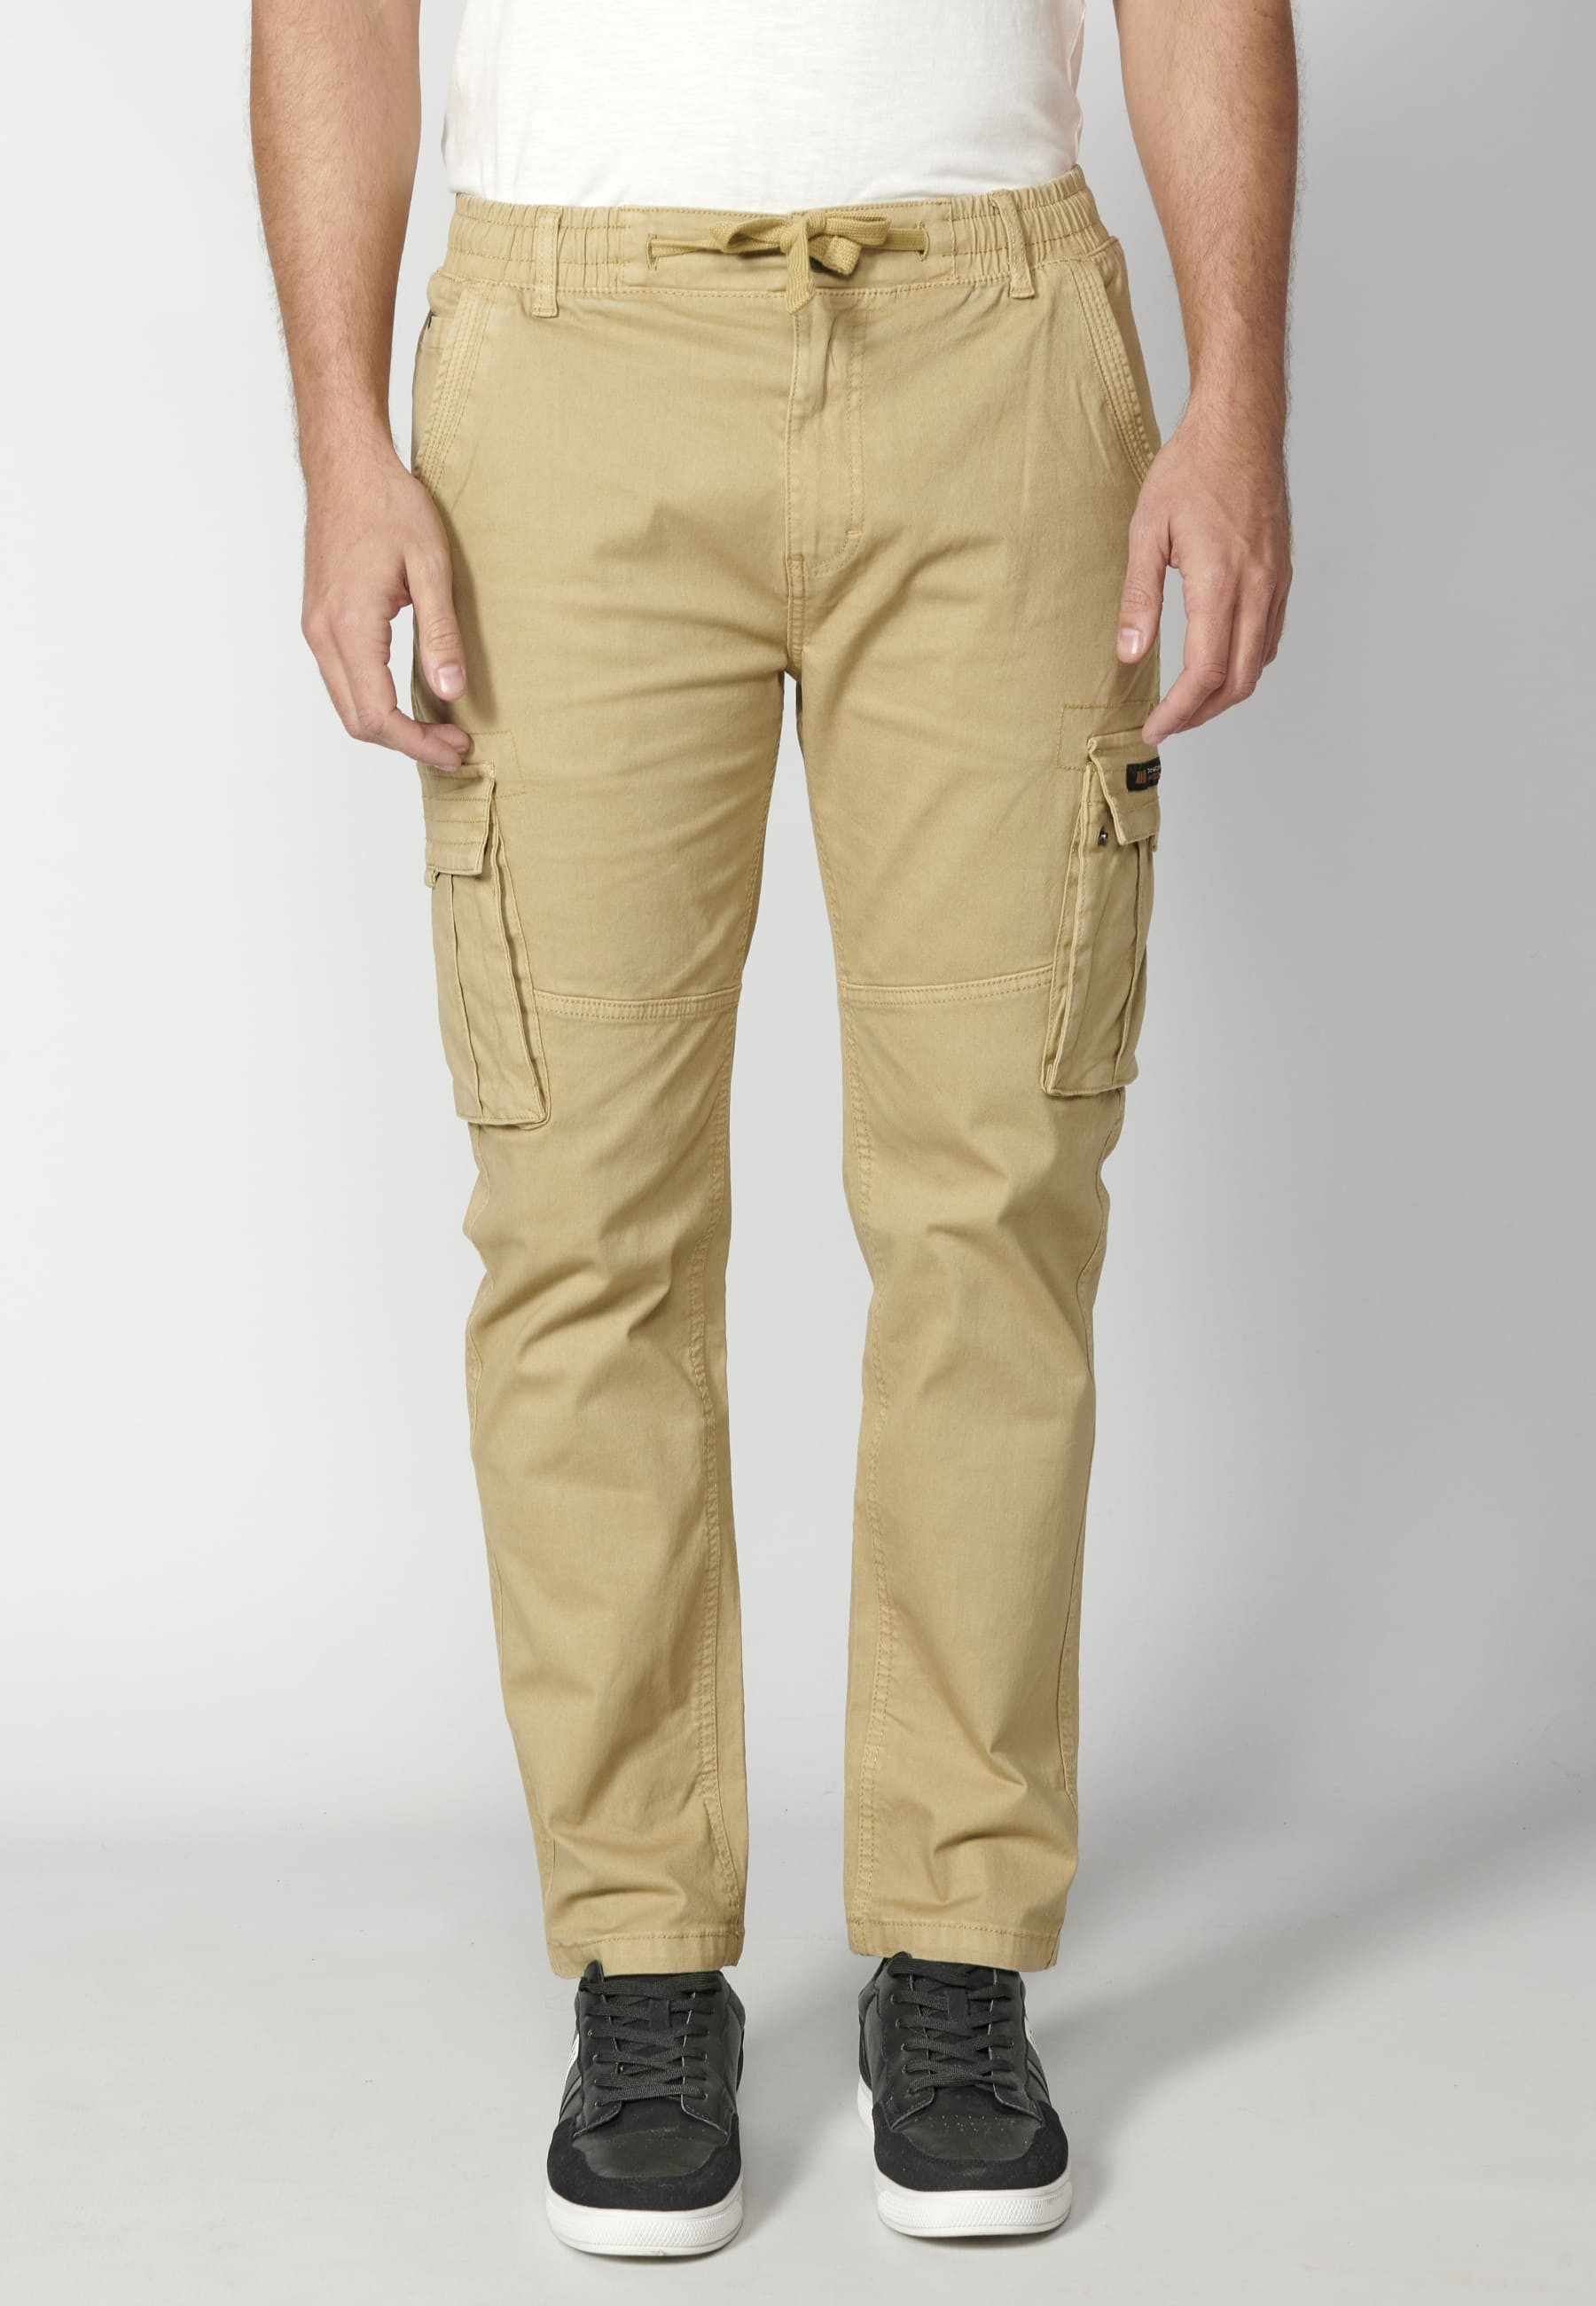 Beige cargo style pants for Men